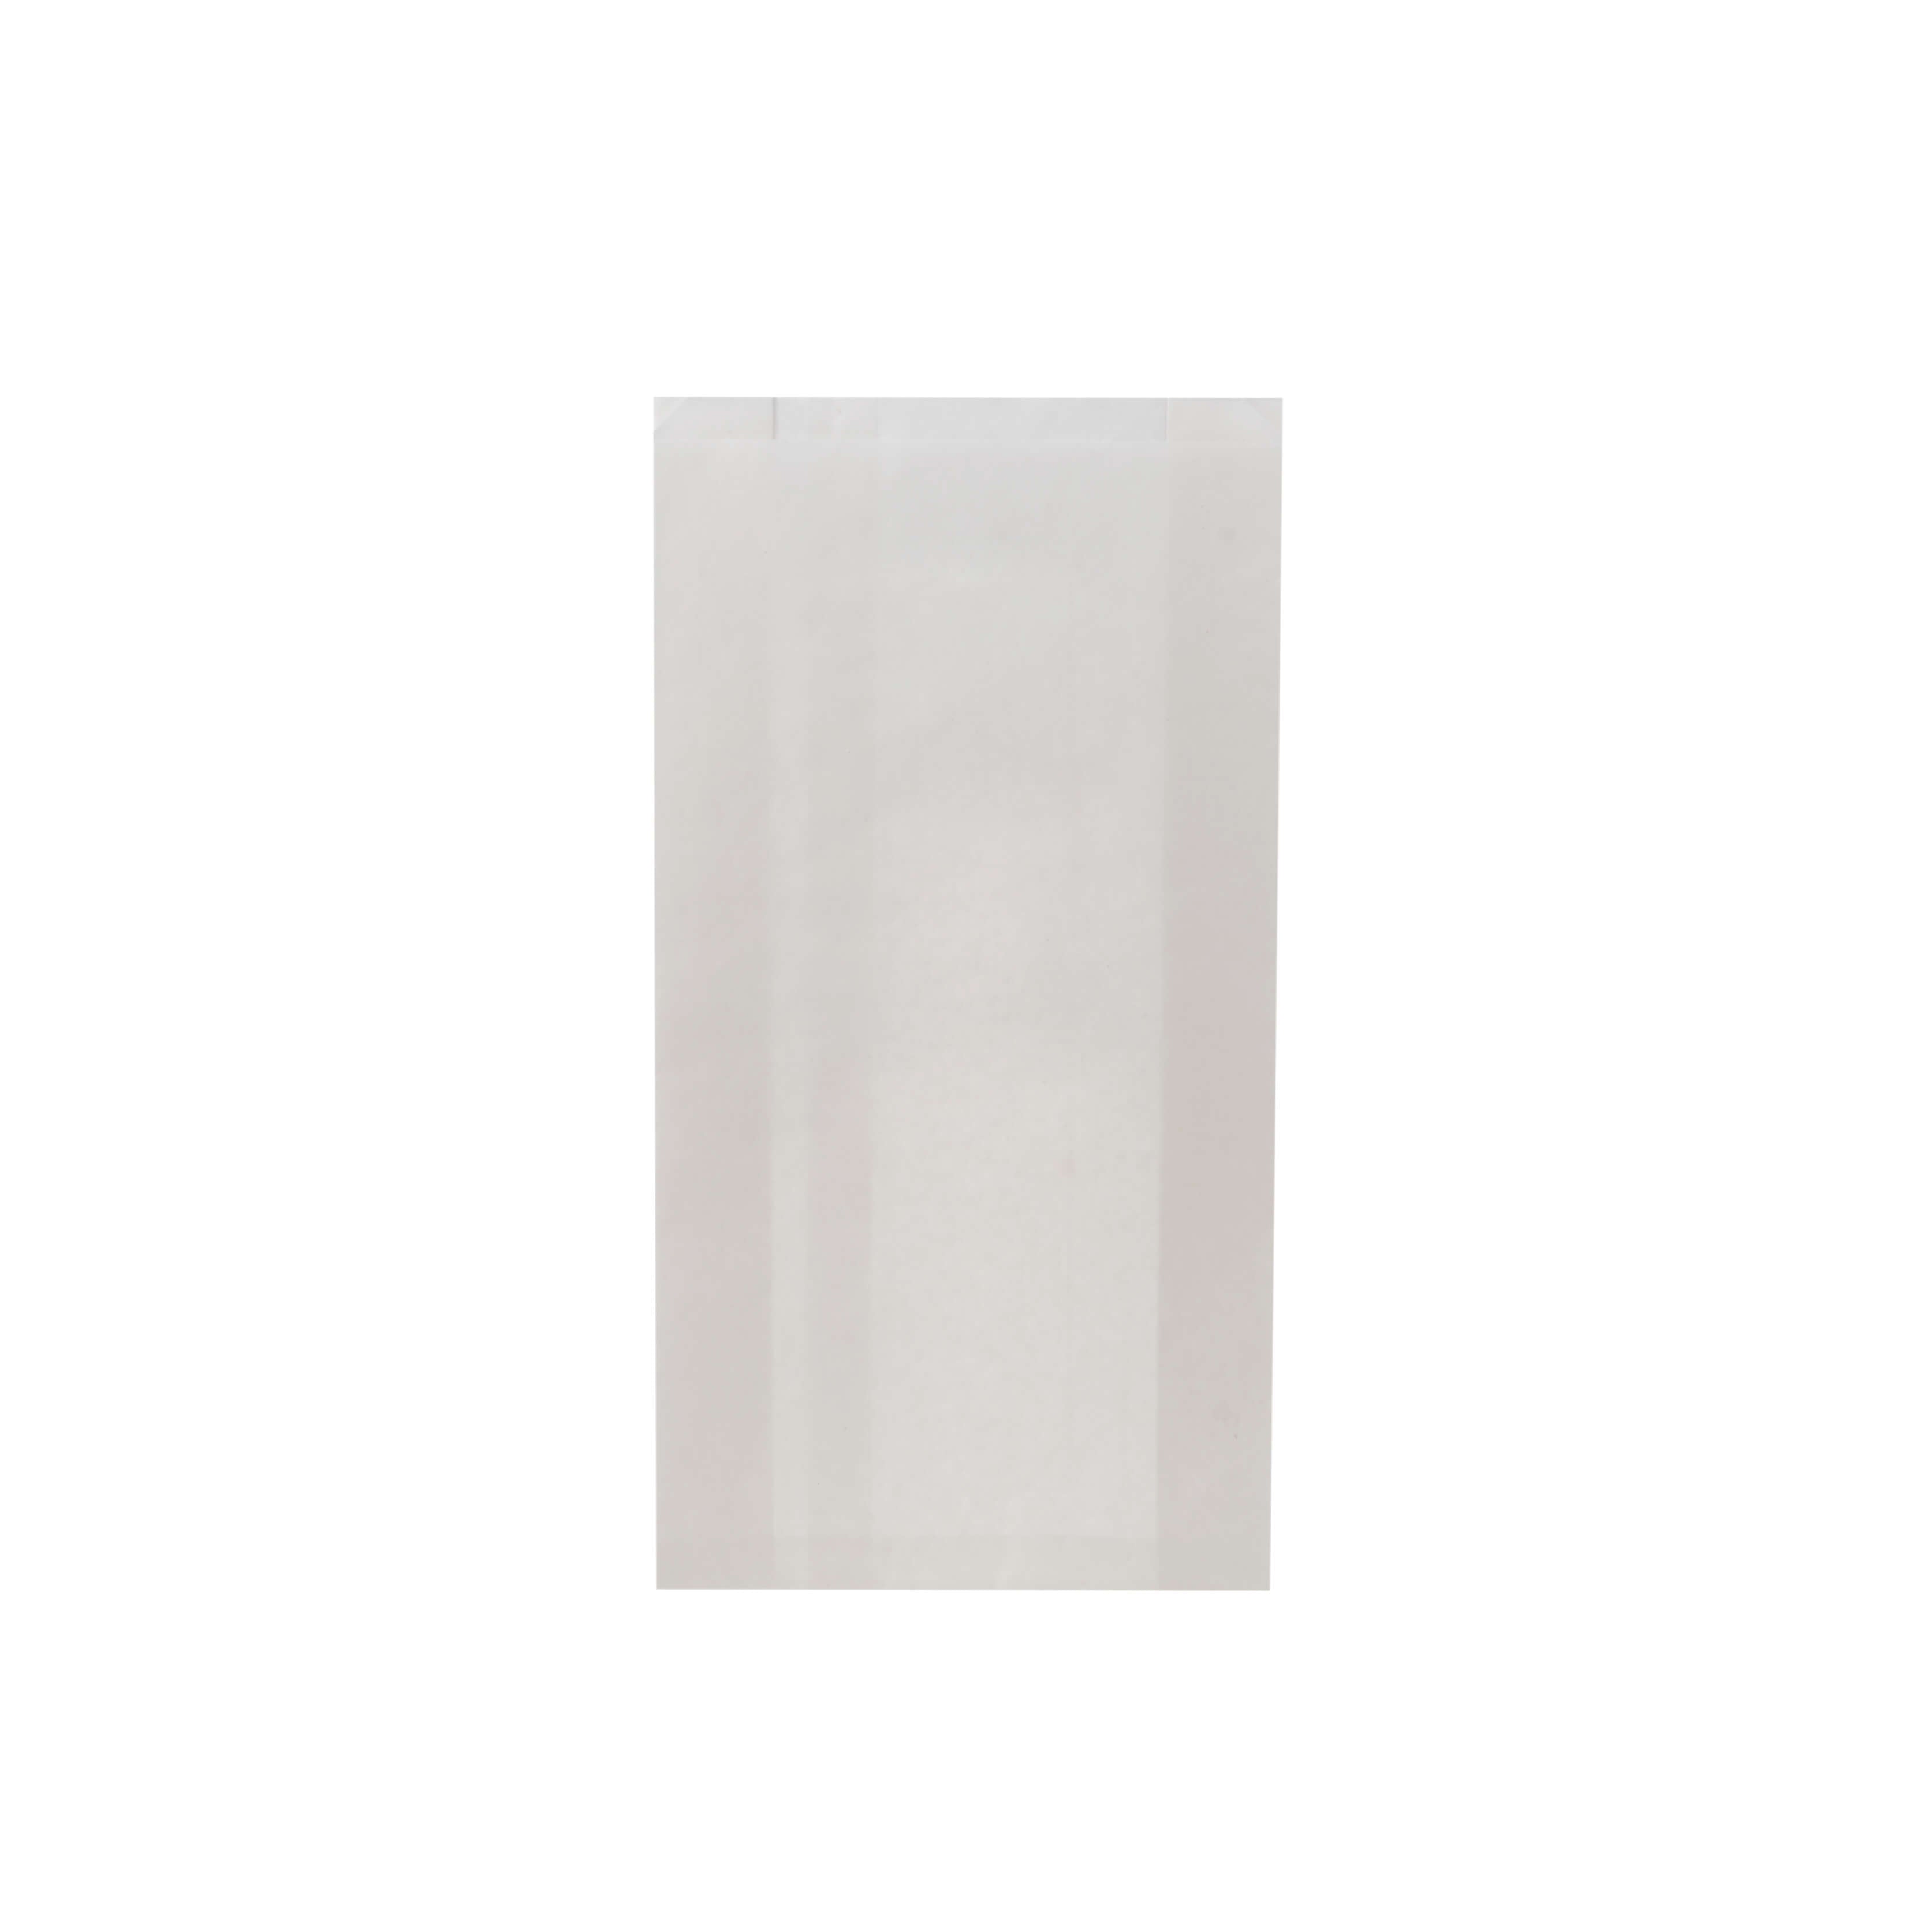  No.4 Pinch or flat bottom paper bag white - Hotpack Global